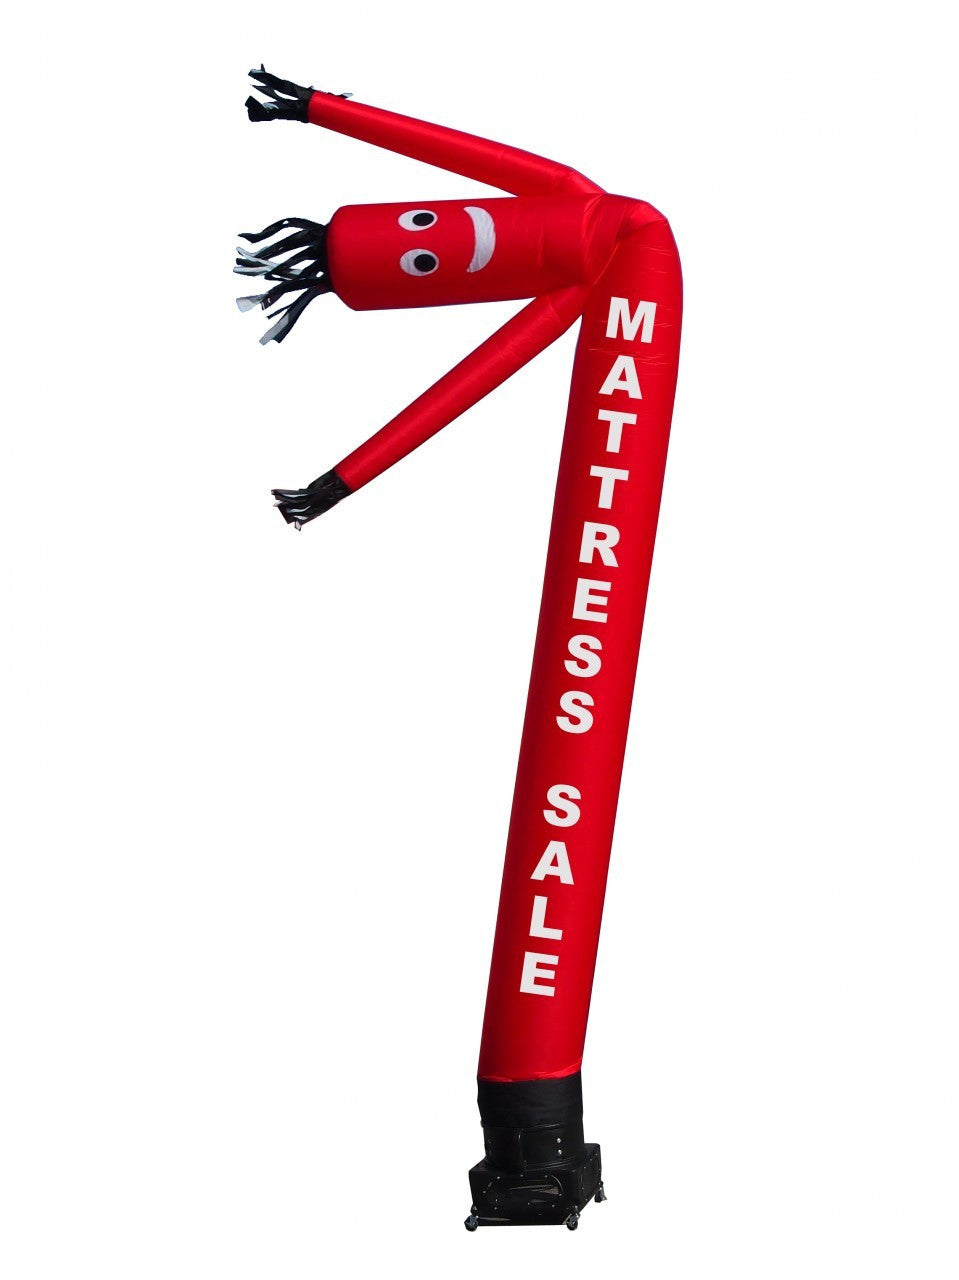 20ft Mattress Sale Red Air Dancer Tube Man Wacky Wavy Inflatables